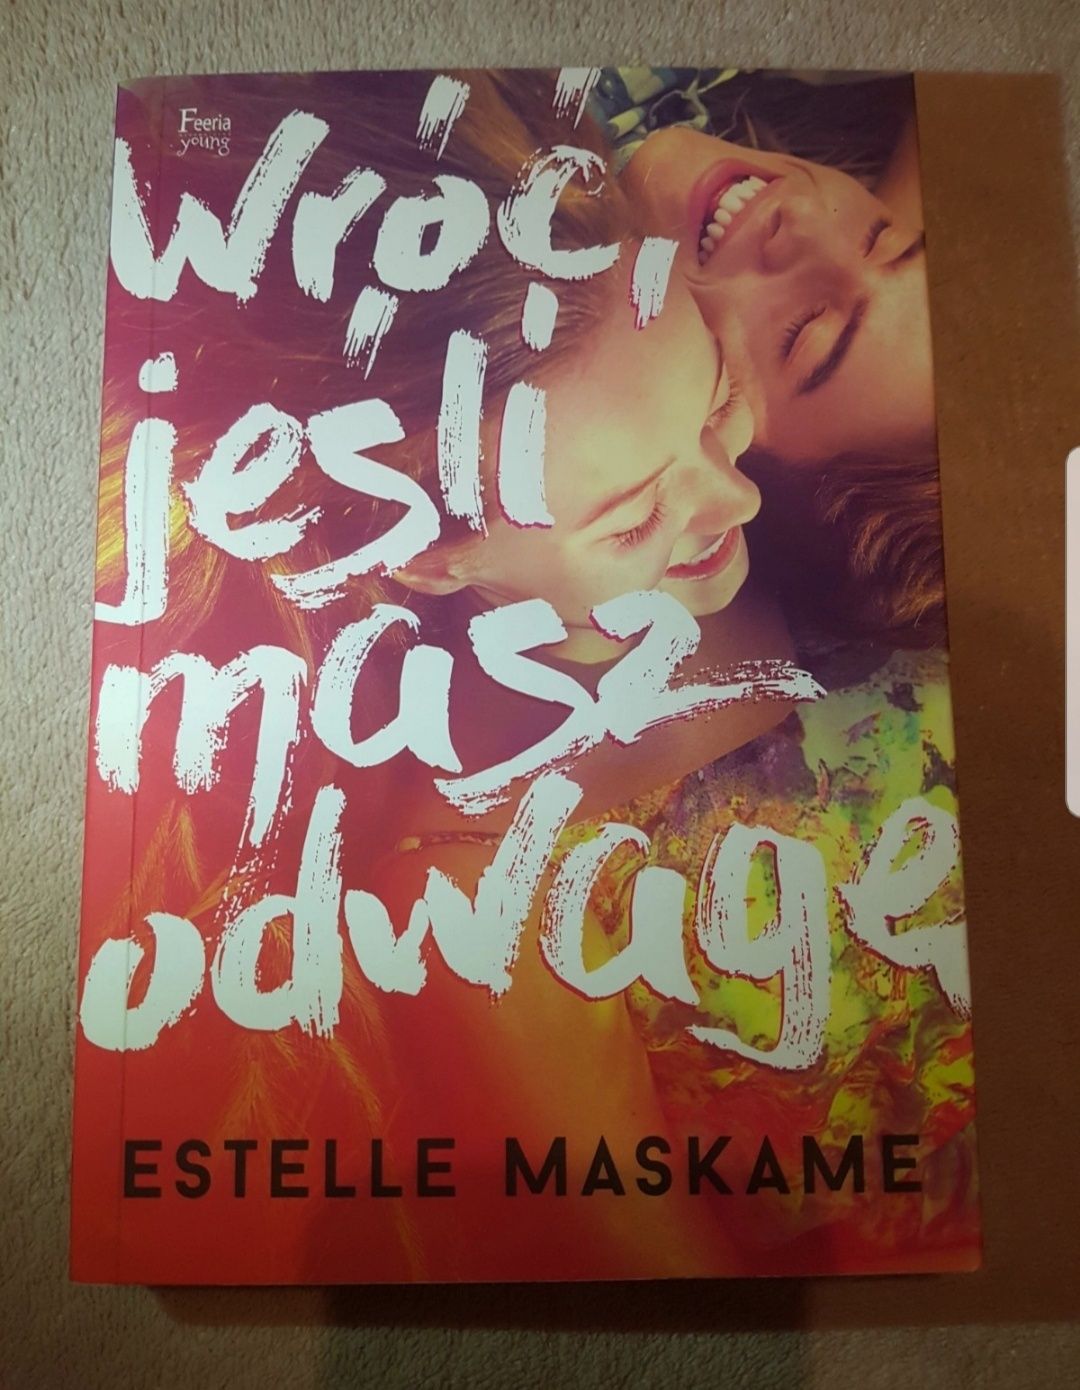 "Wróć, jeśli masz odwagę" Estelle Maskame